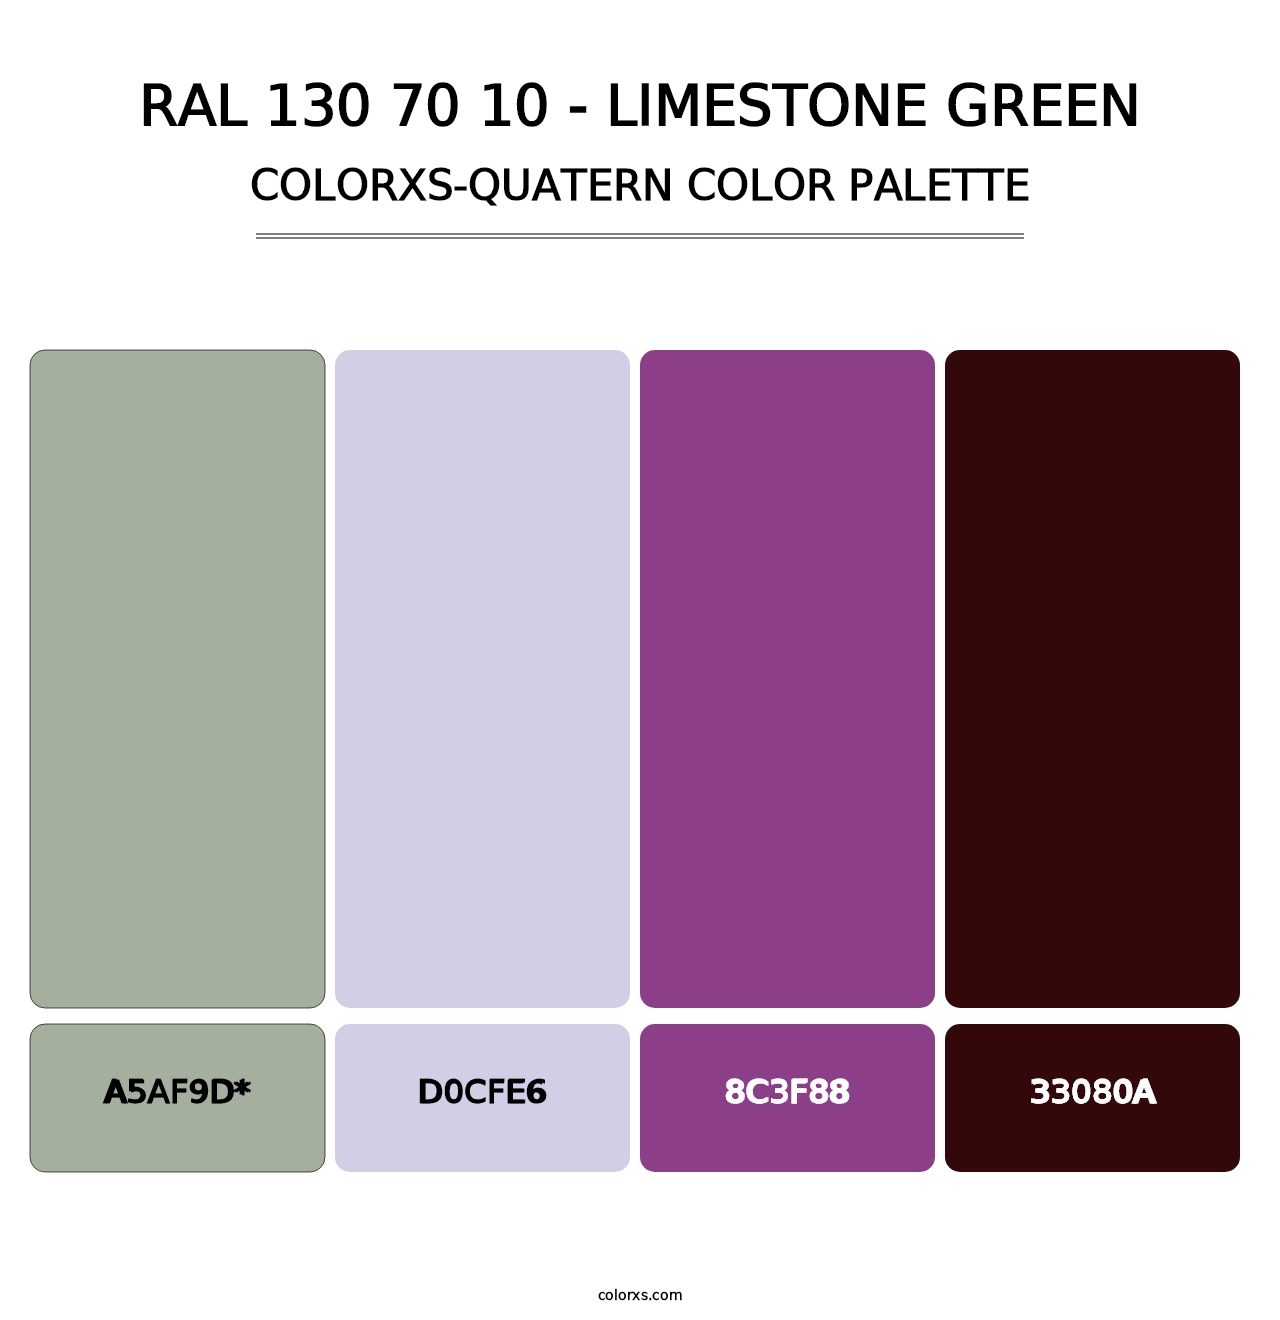 RAL 130 70 10 - Limestone Green - Colorxs Quatern Palette